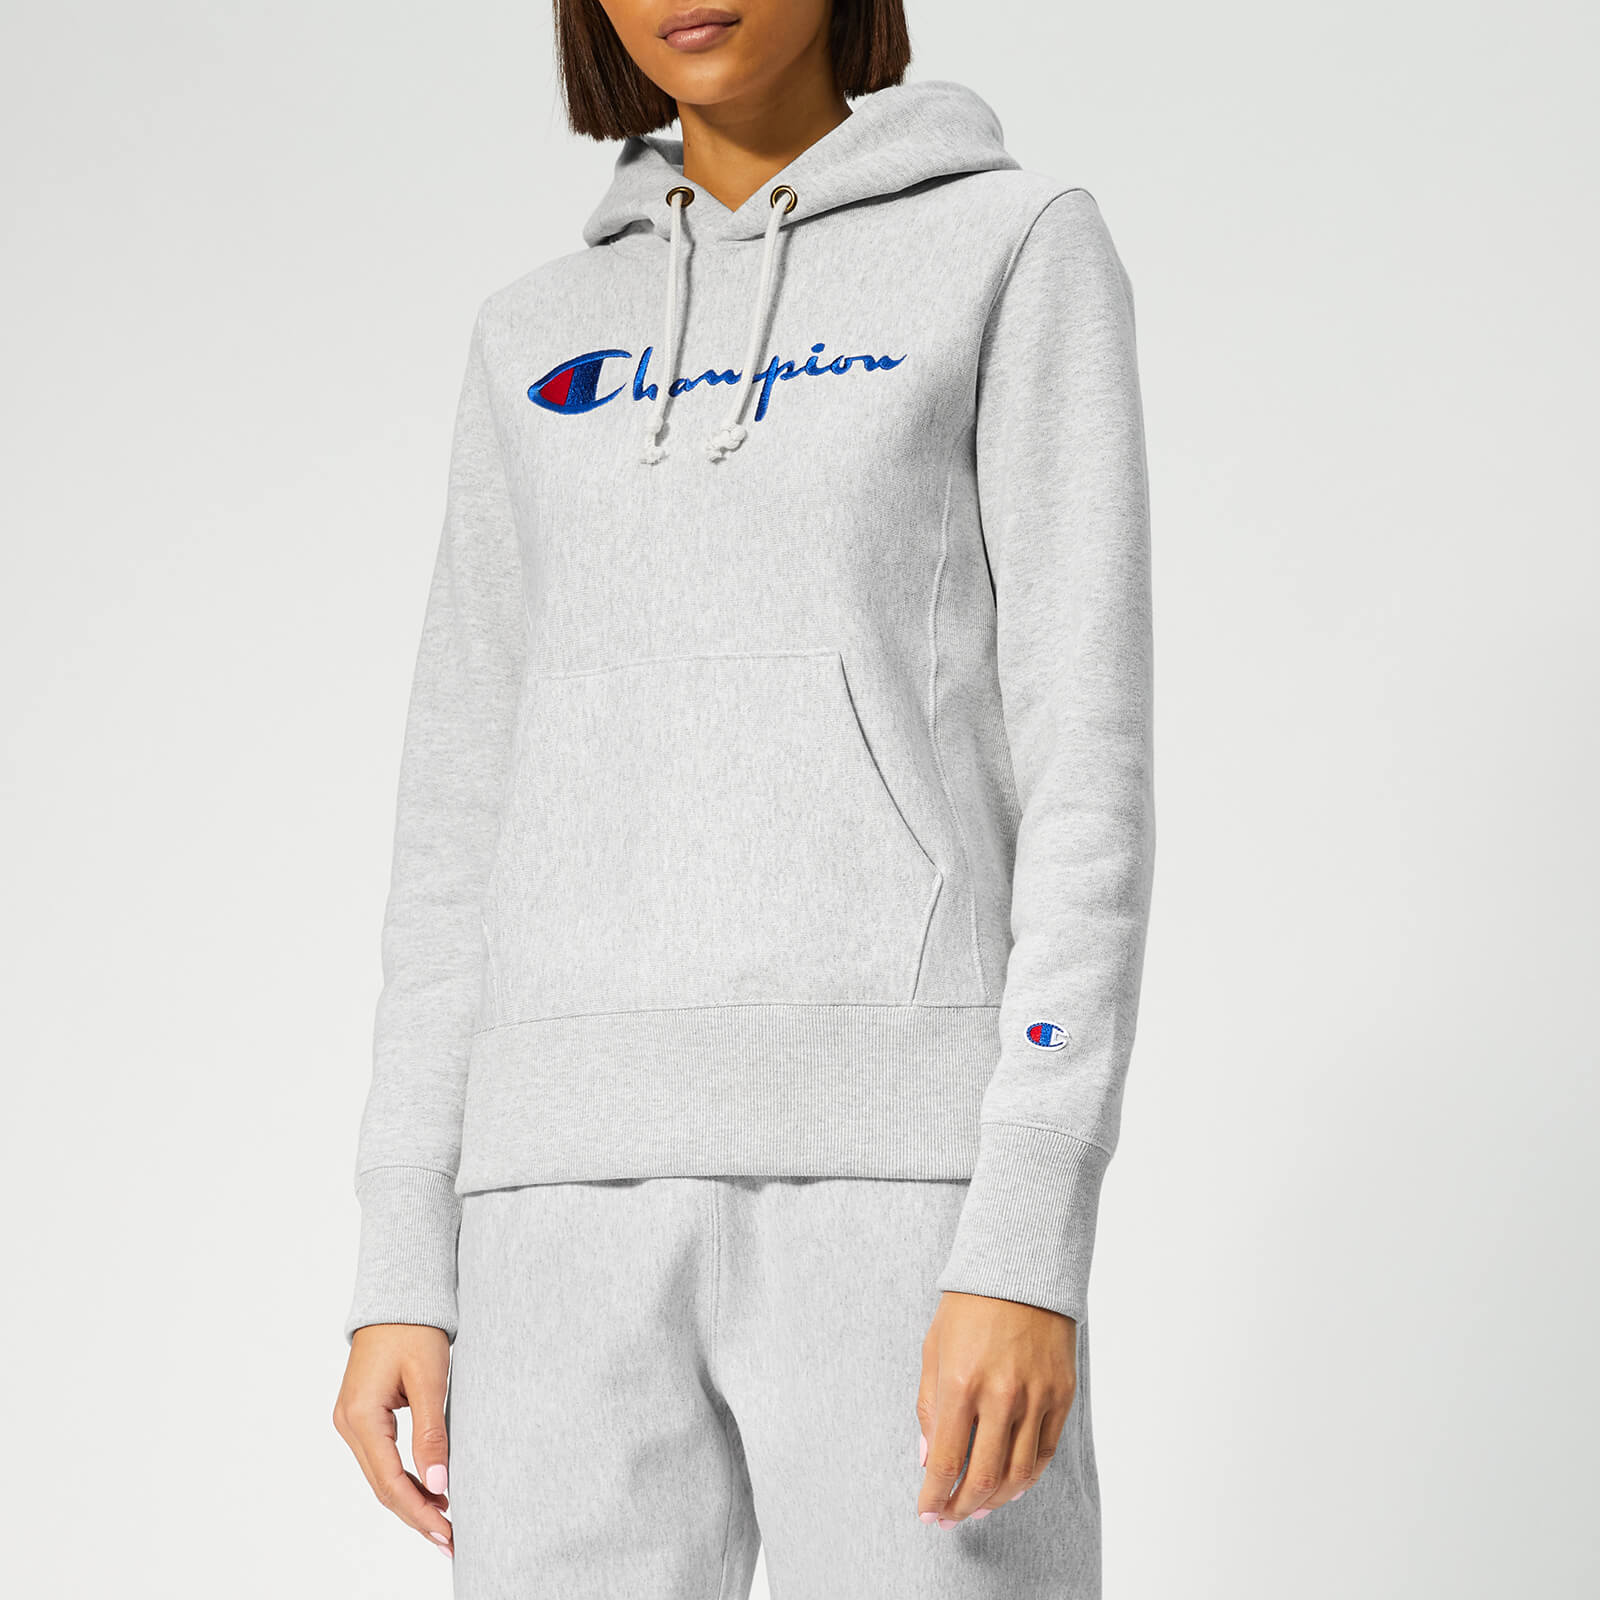 champion women's hooded sweatshirt